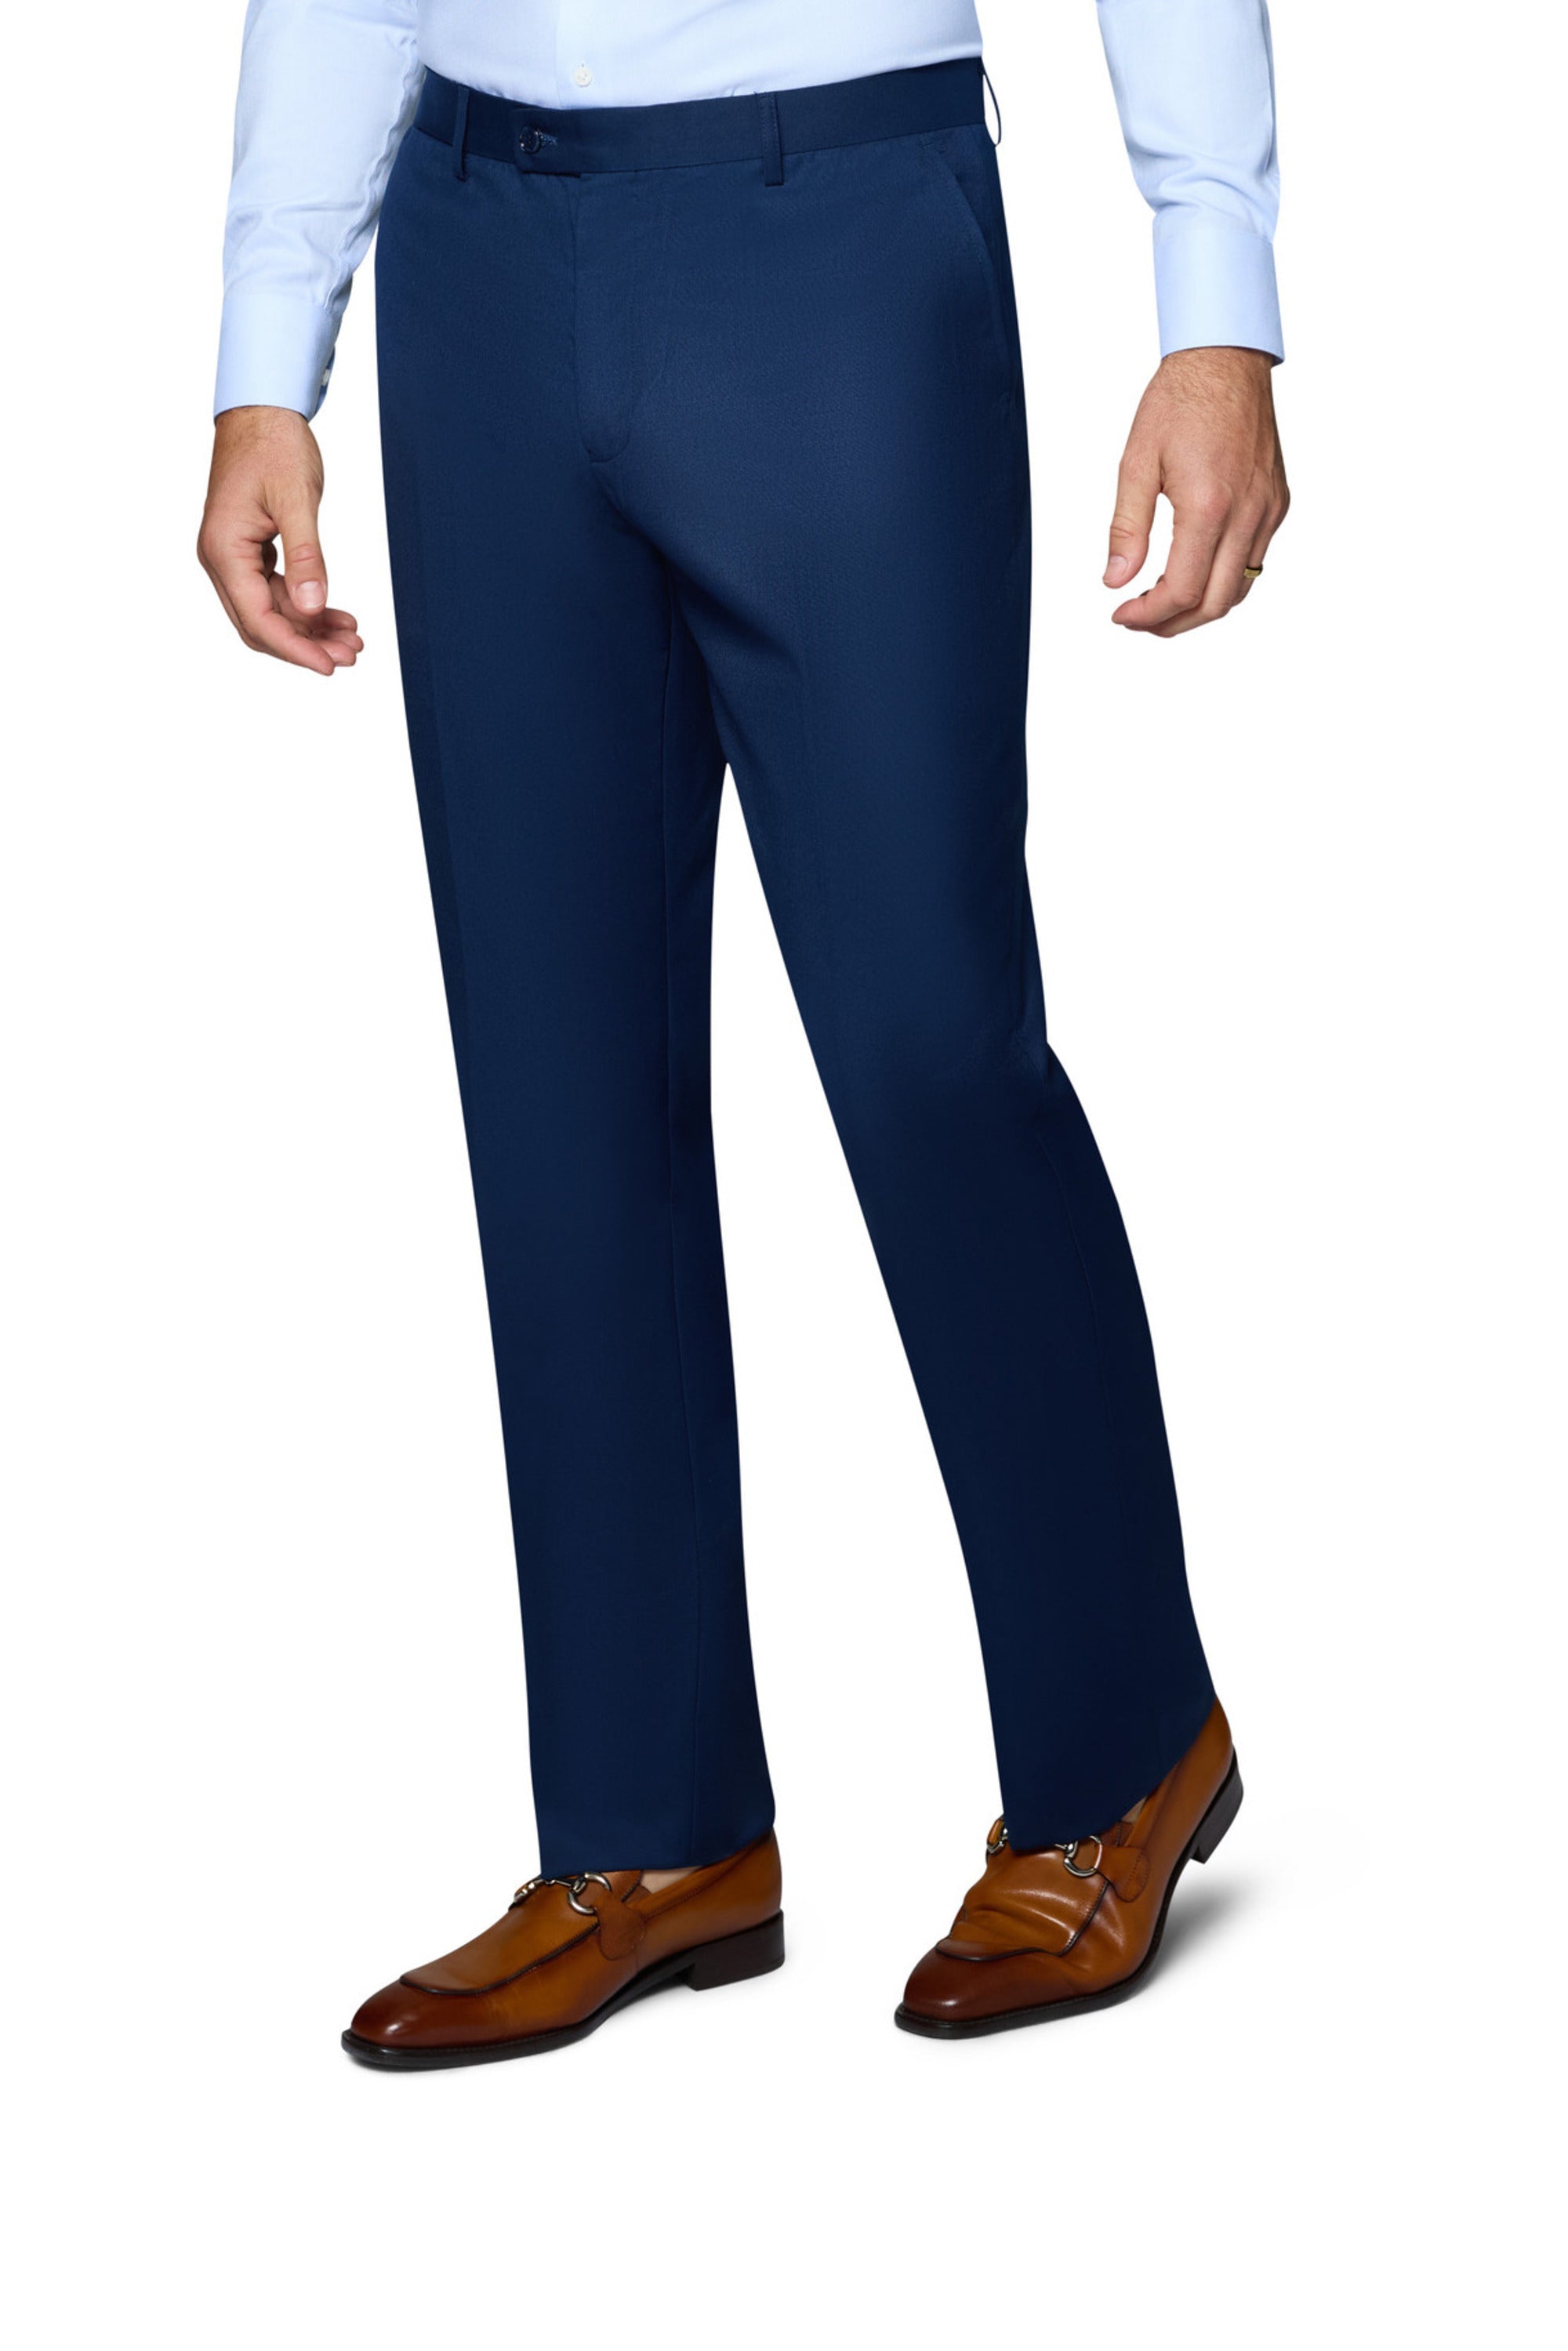 Berragamo Solid Slim Fit Pants - New Blue